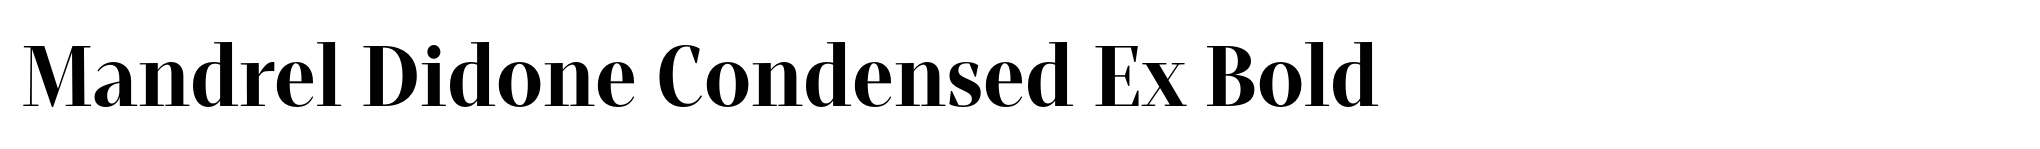 Mandrel Didone Condensed Ex Bold image